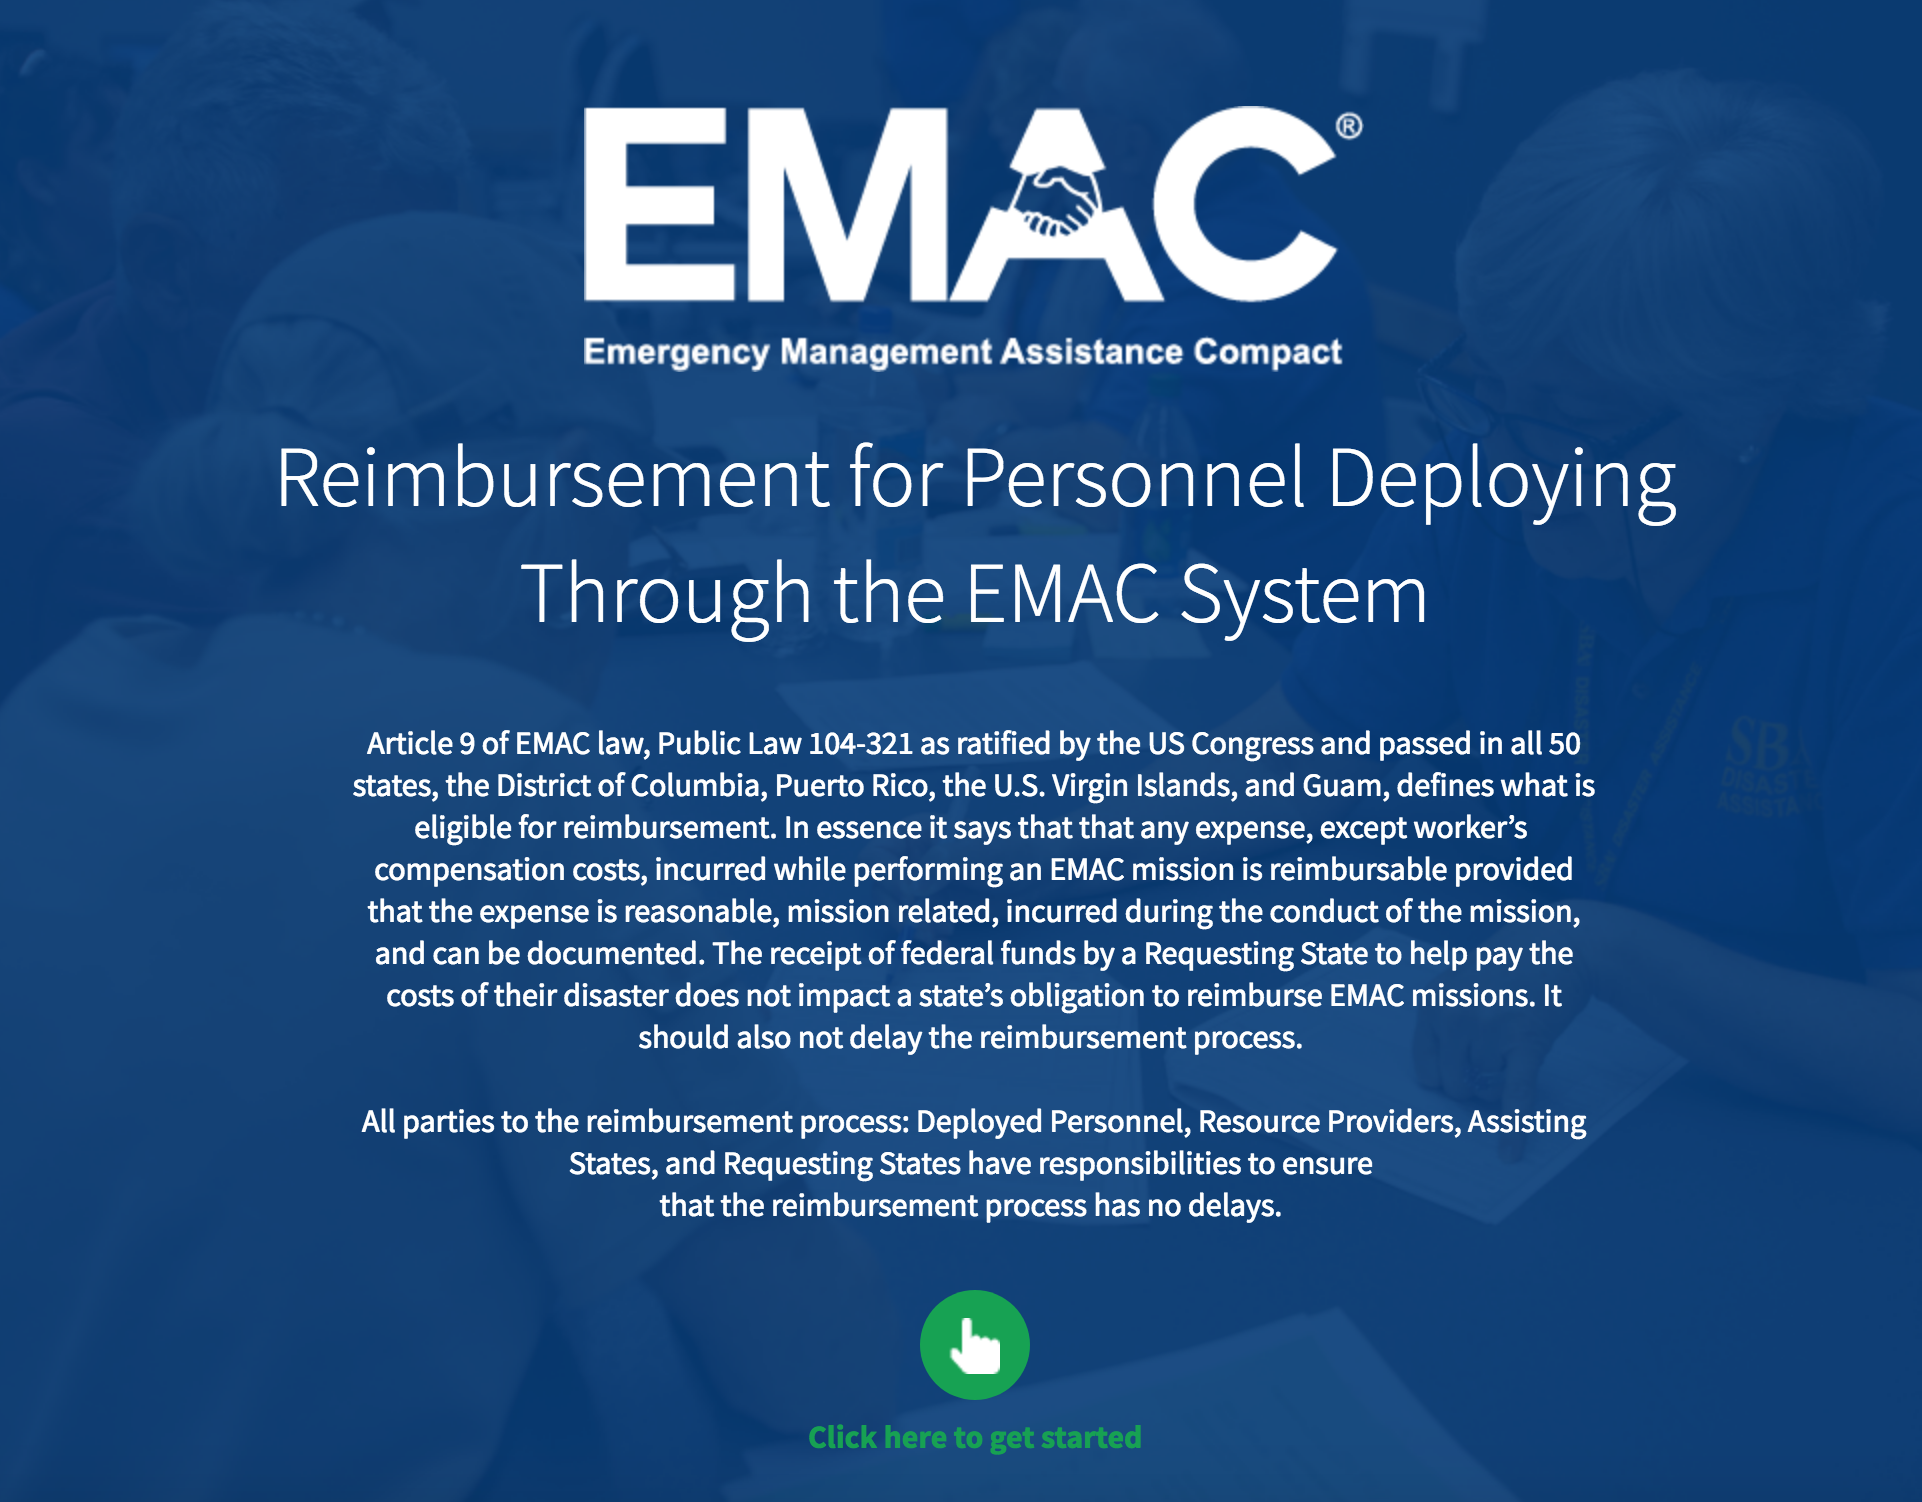 Basics of EMAC Reimbursement